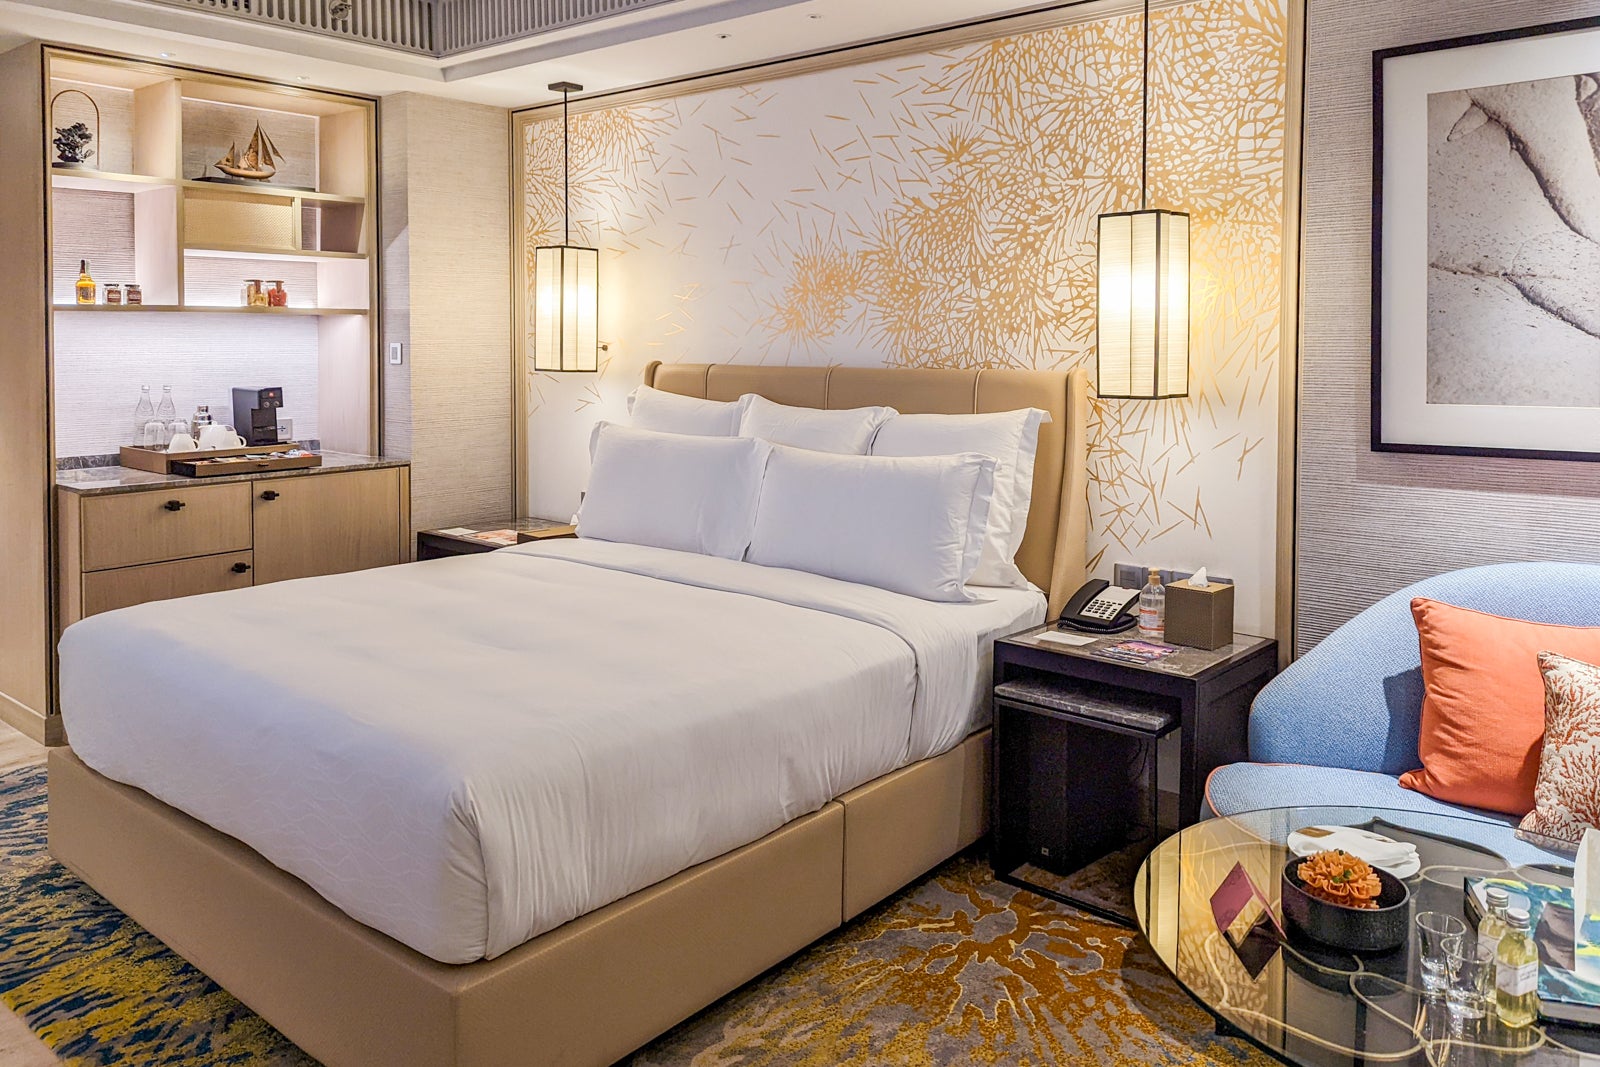 InterContinental Phuket Resort bed